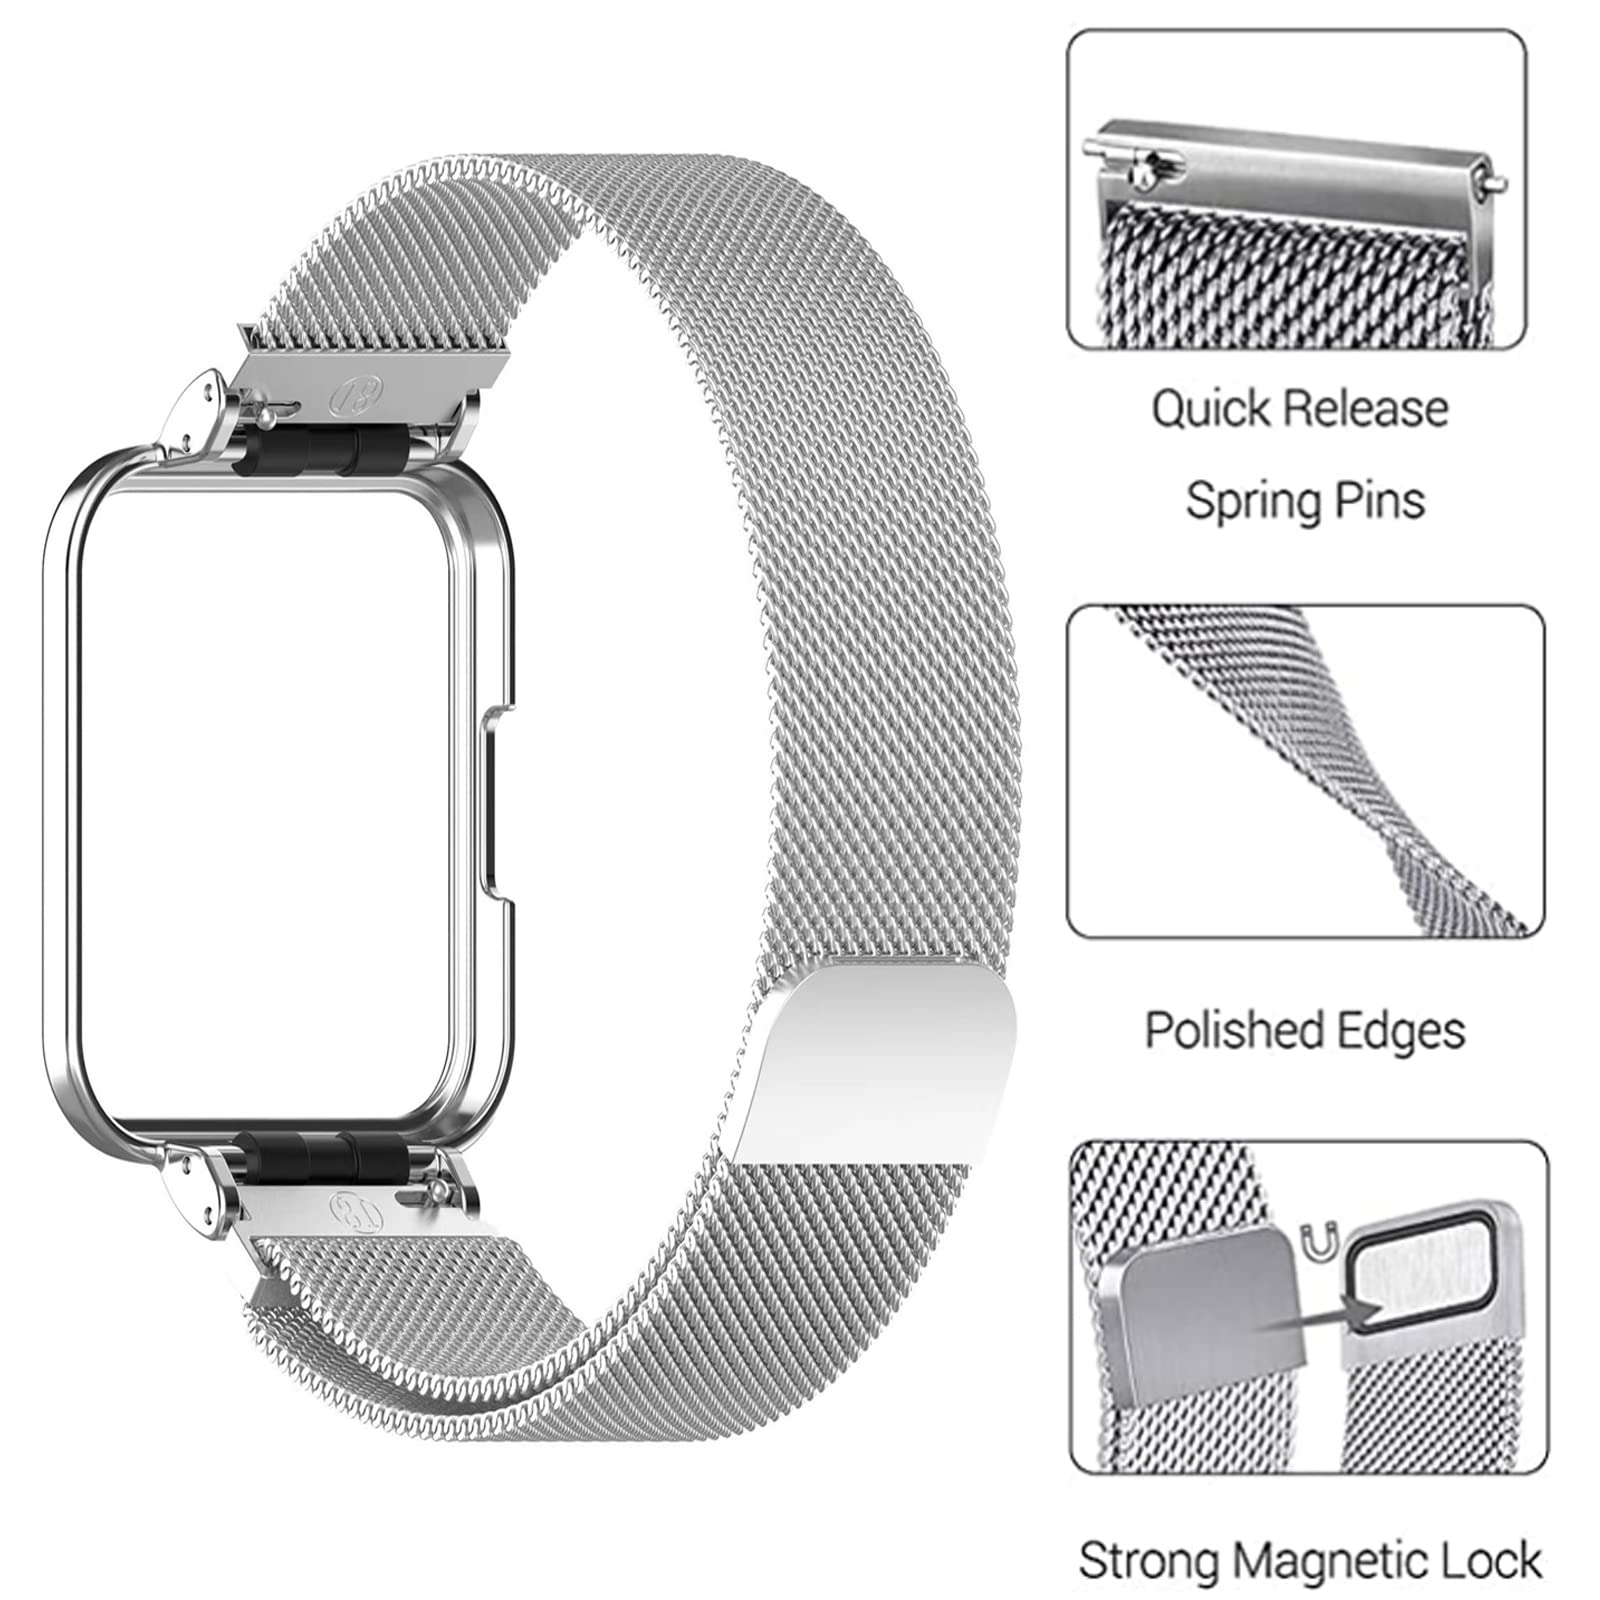 O Ozone - Redmi Watch 2 Lite /Xiaomi Mi Watch 2 Lite | Milanese Stainless Steel Band- Rose Gold